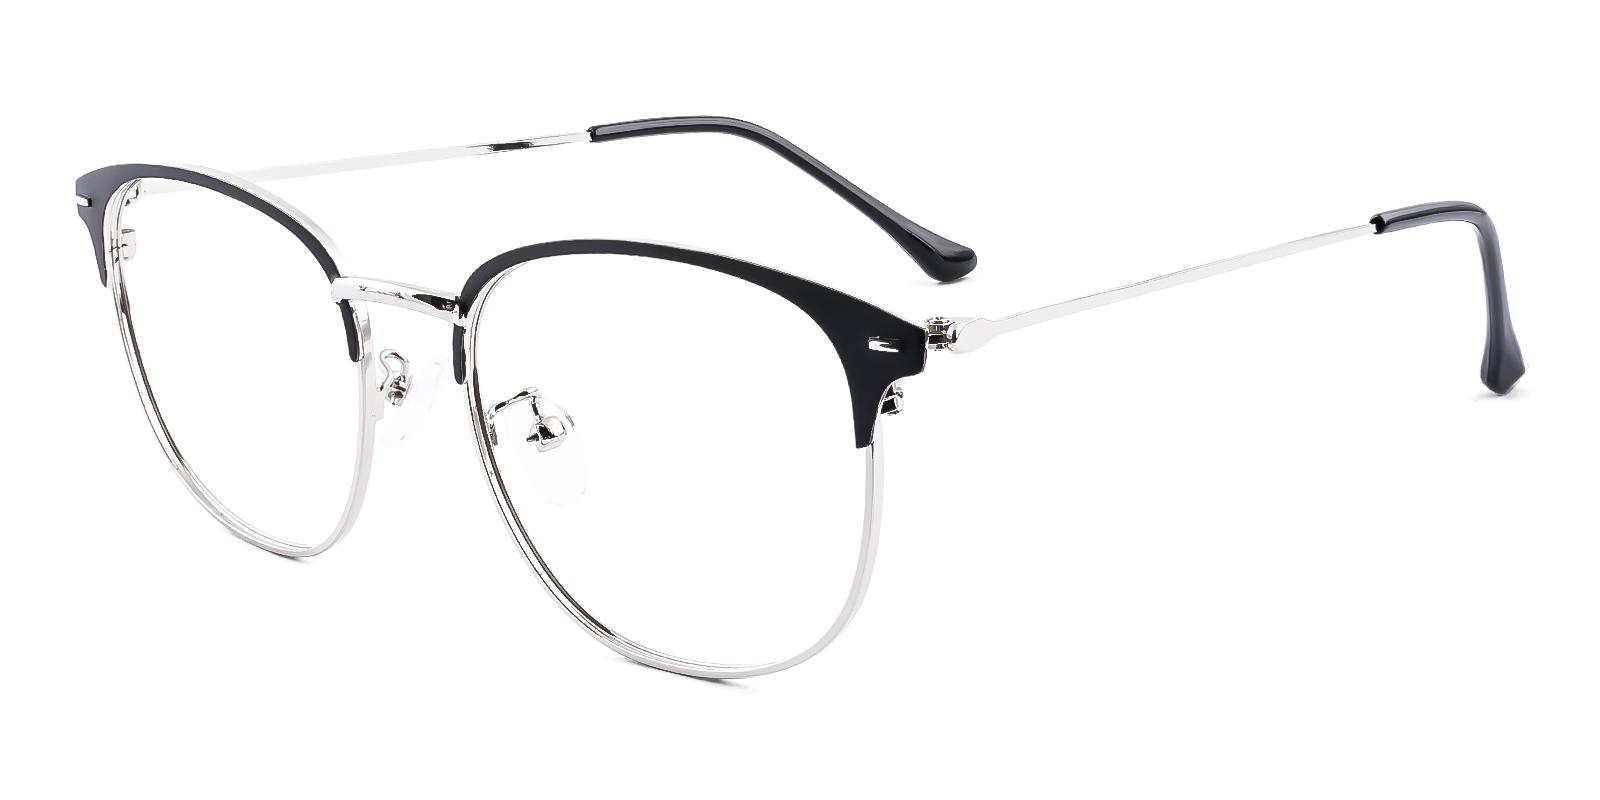 Plensure Silver Metal Eyeglasses , NosePads Frames from ABBE Glasses